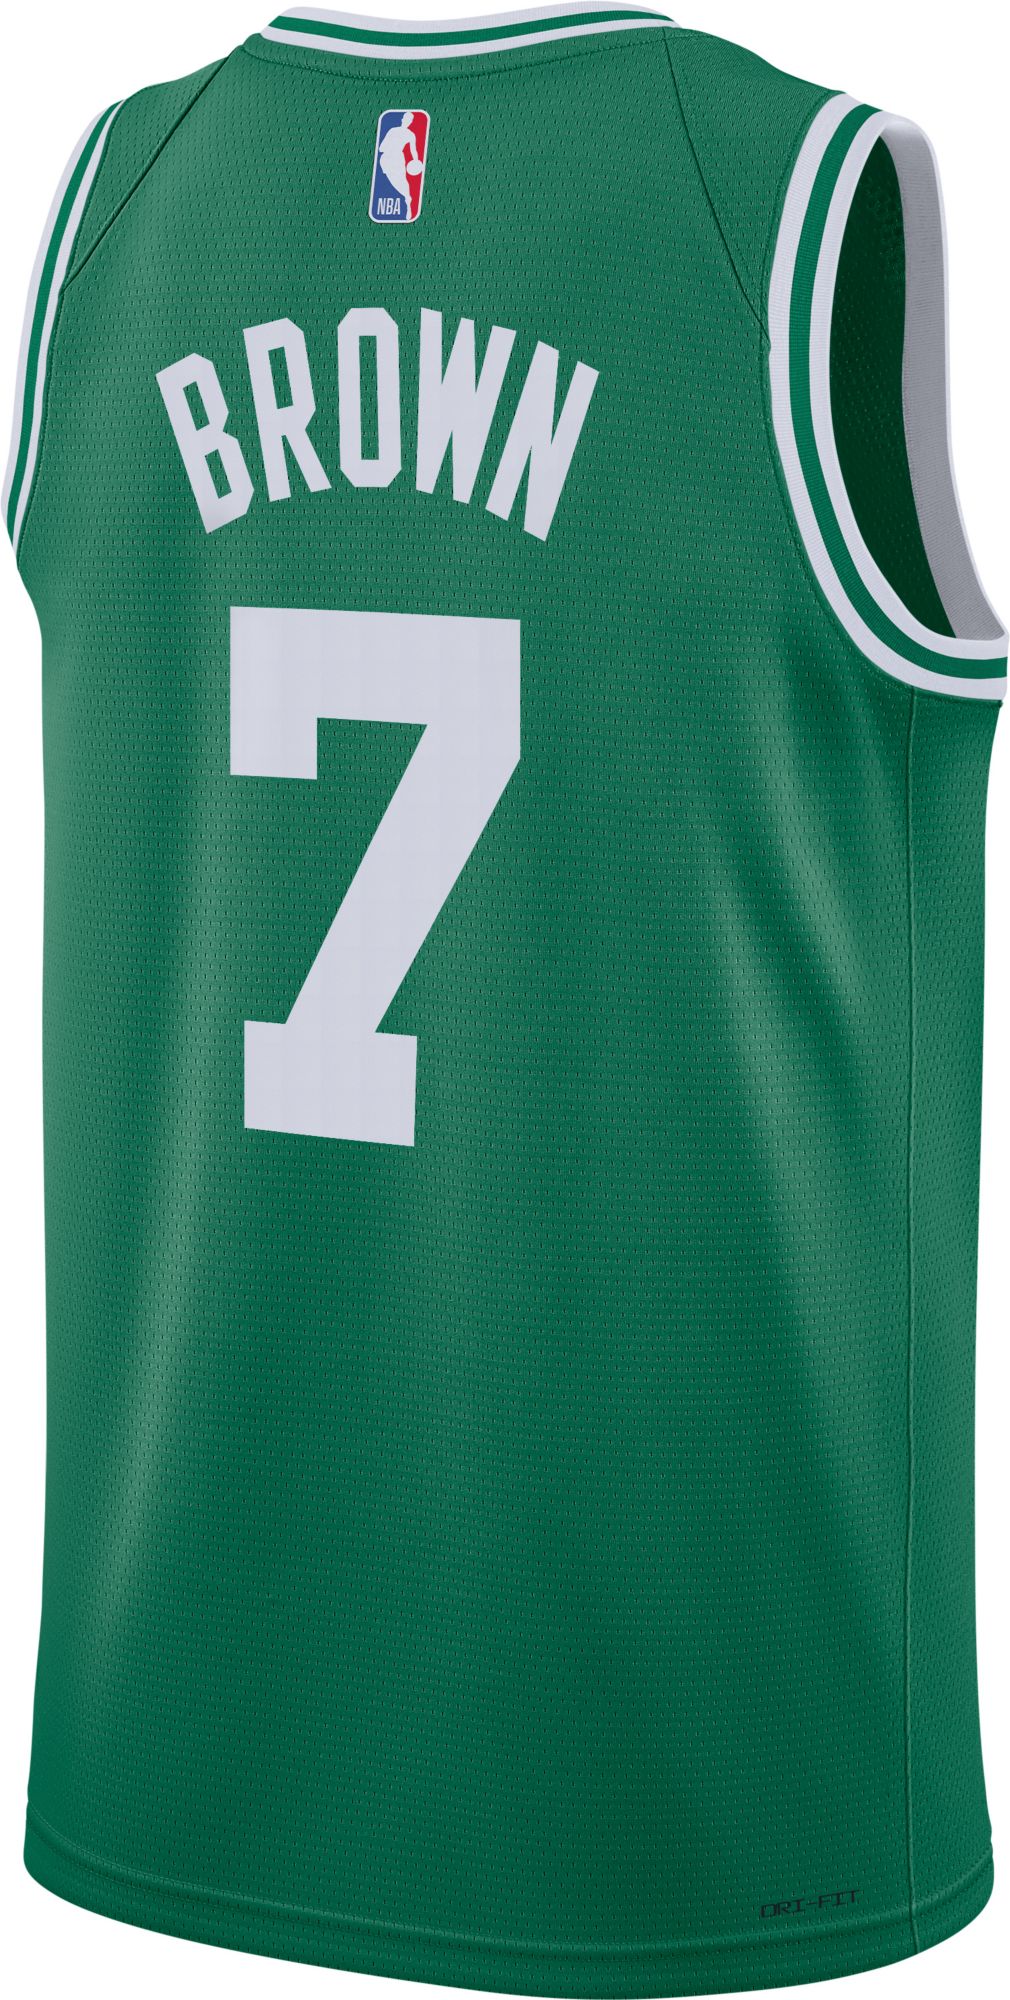 Men's Nike Boston Celtics No7 Jaylen Brown Green Basketball Swingman City Edition 2019 20 Jersey